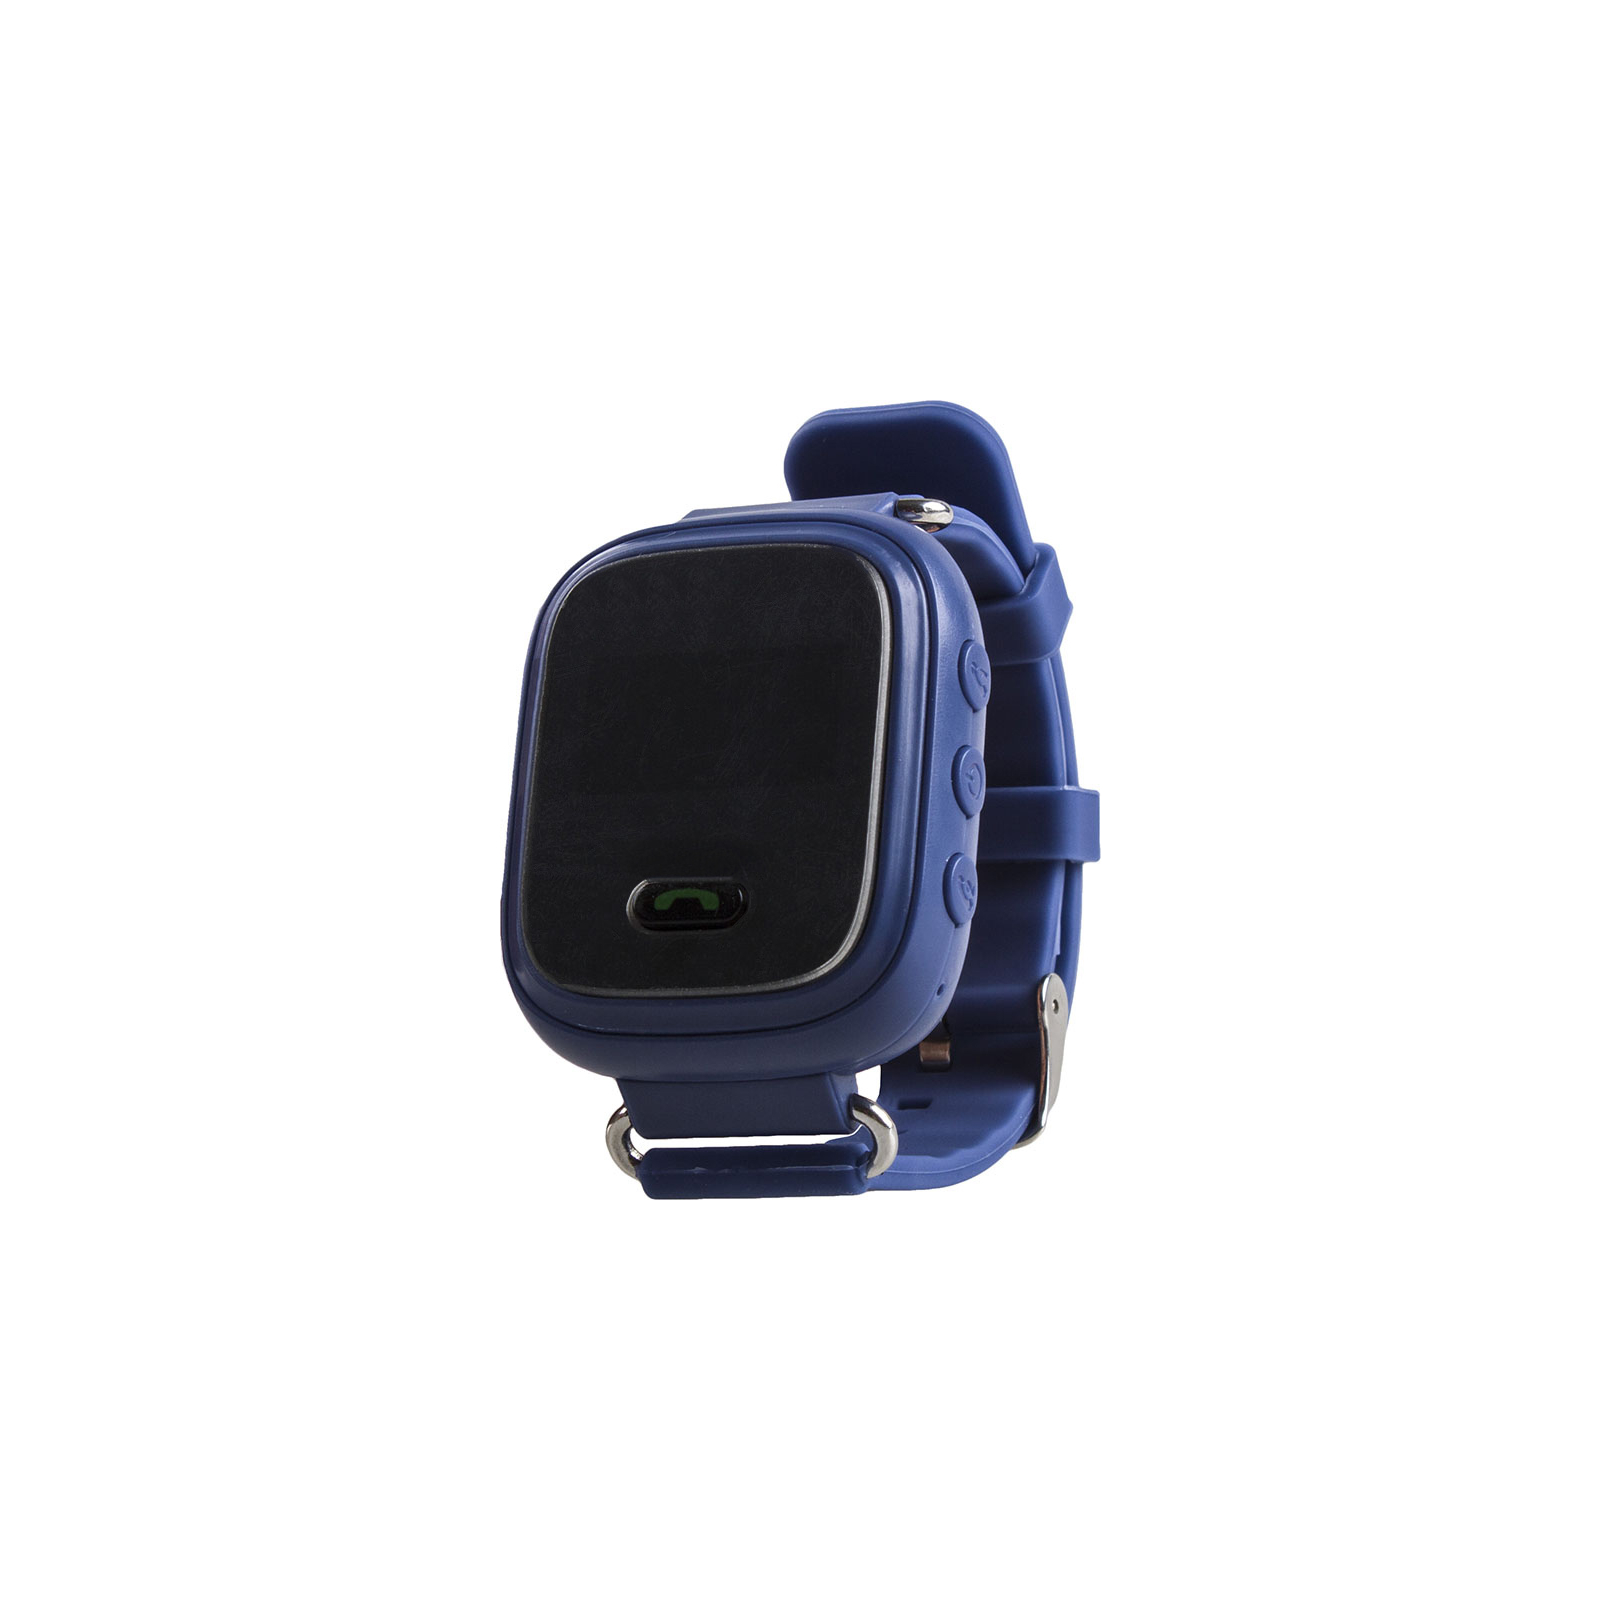 Смарт-годинник UWatch Q60 Kid smart watch Black (F_50516)